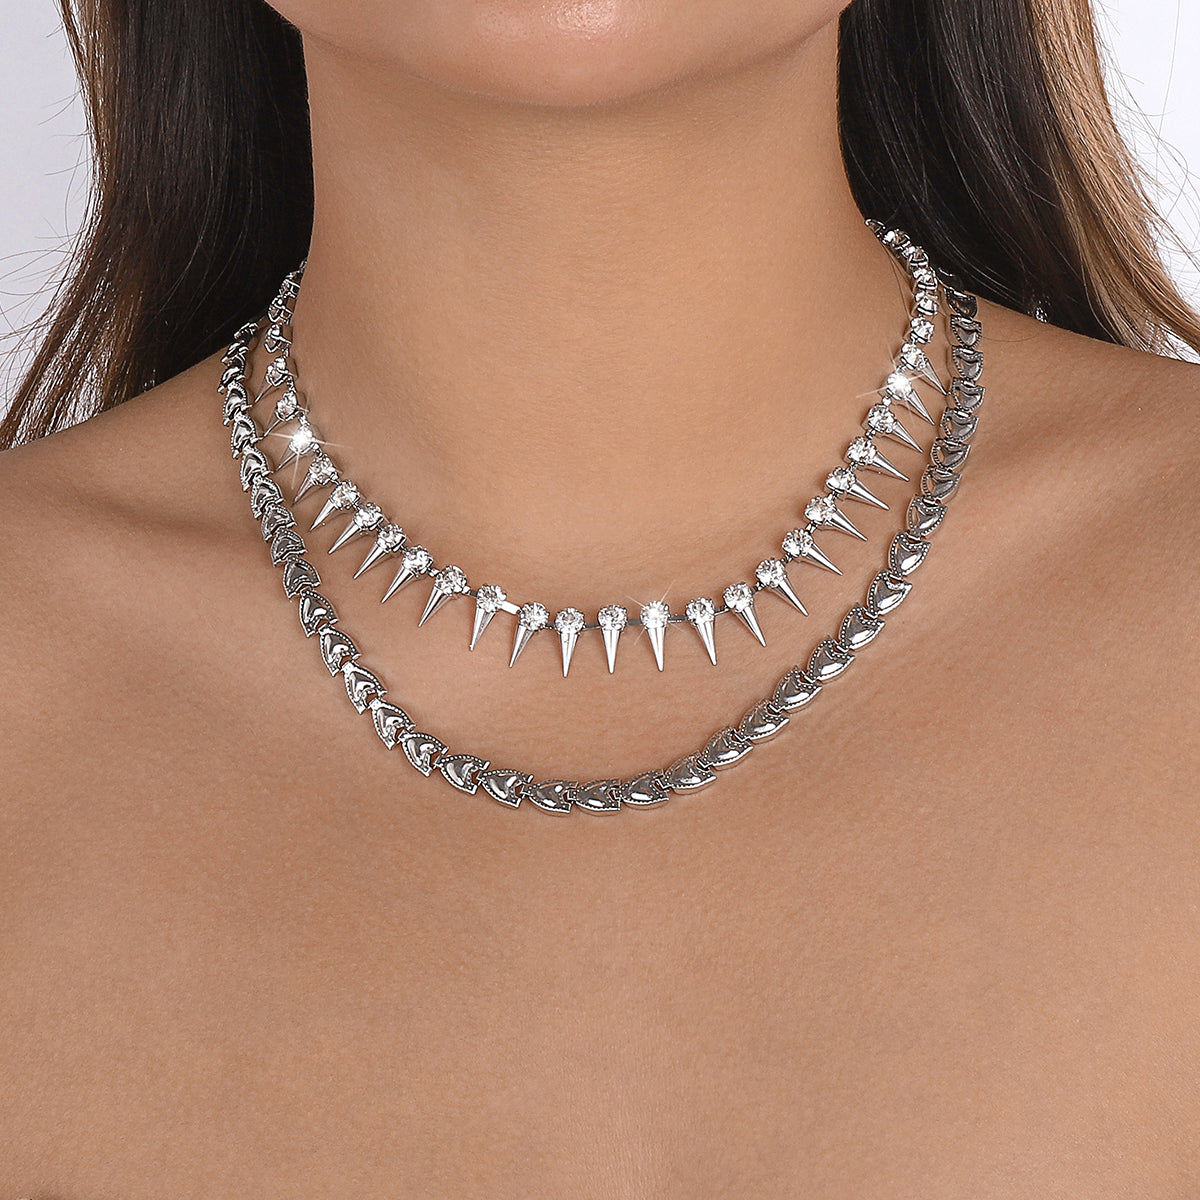 Spike Rivet Rhinestone Choker Necklace medyjewelry